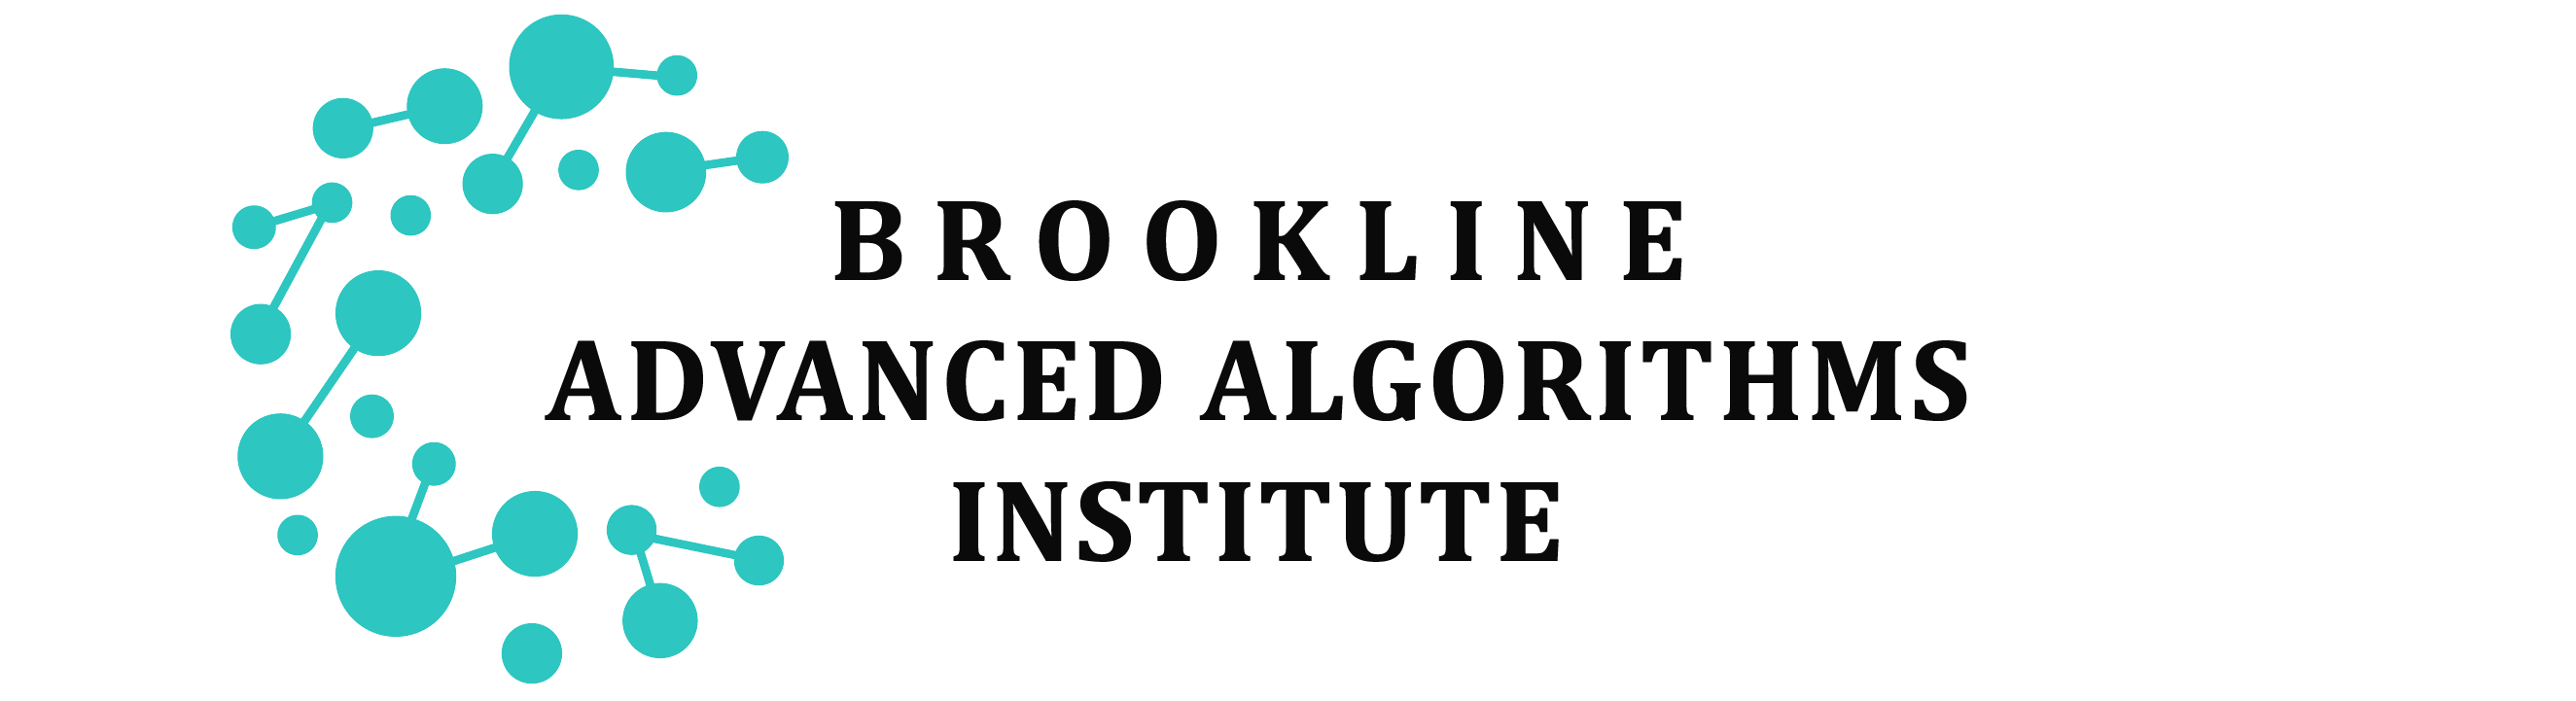 Brookline Advanced Algorithms Institute